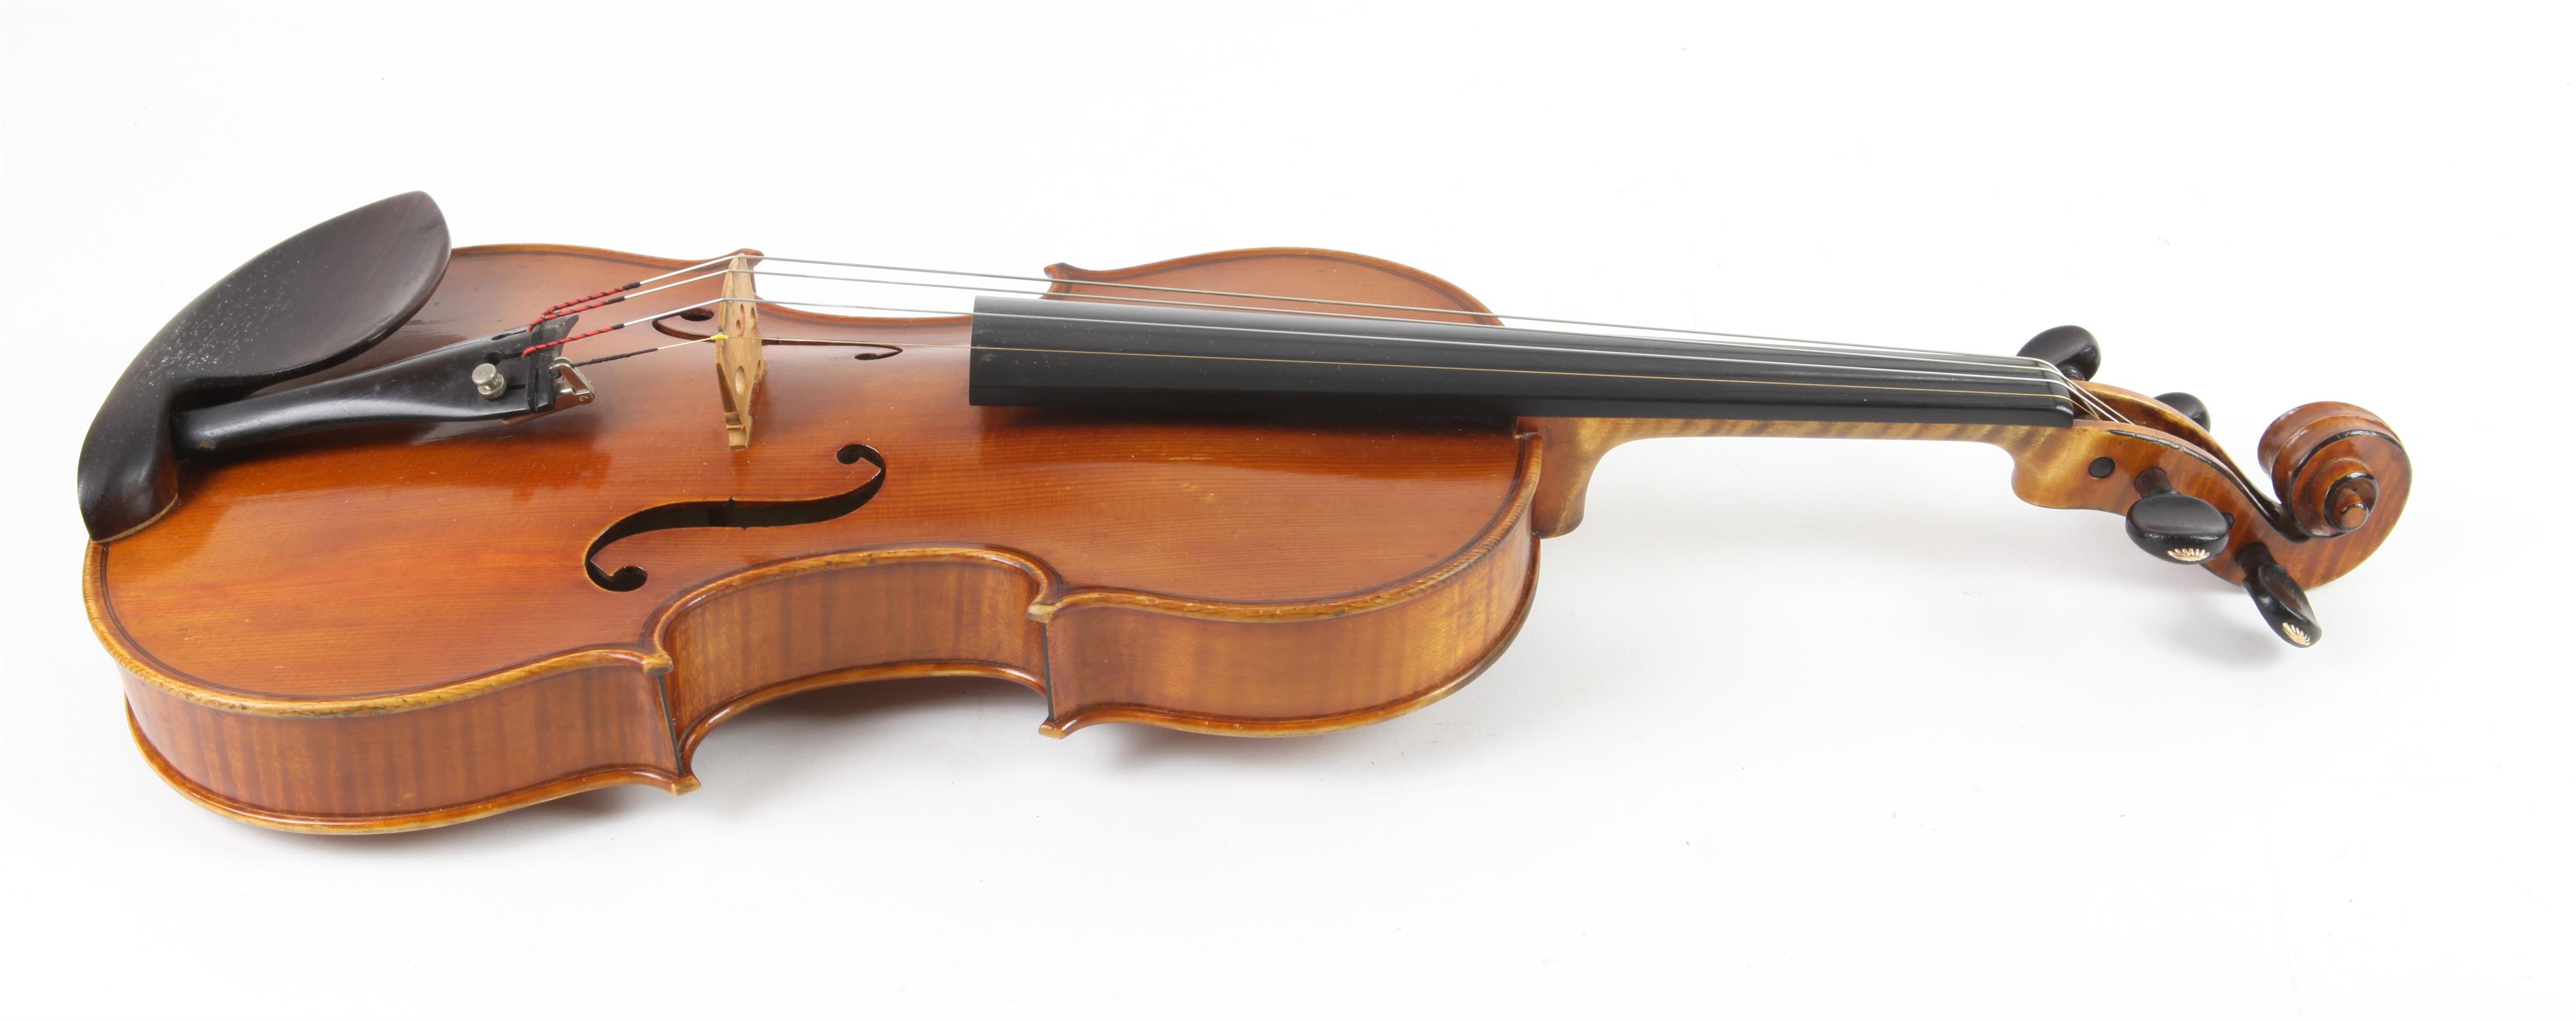 Carlo Giuseppe Oddone. A violin after Stradivari. Labelled Carlo Giuseppe Oddone fece. Torino A. - Image 9 of 39